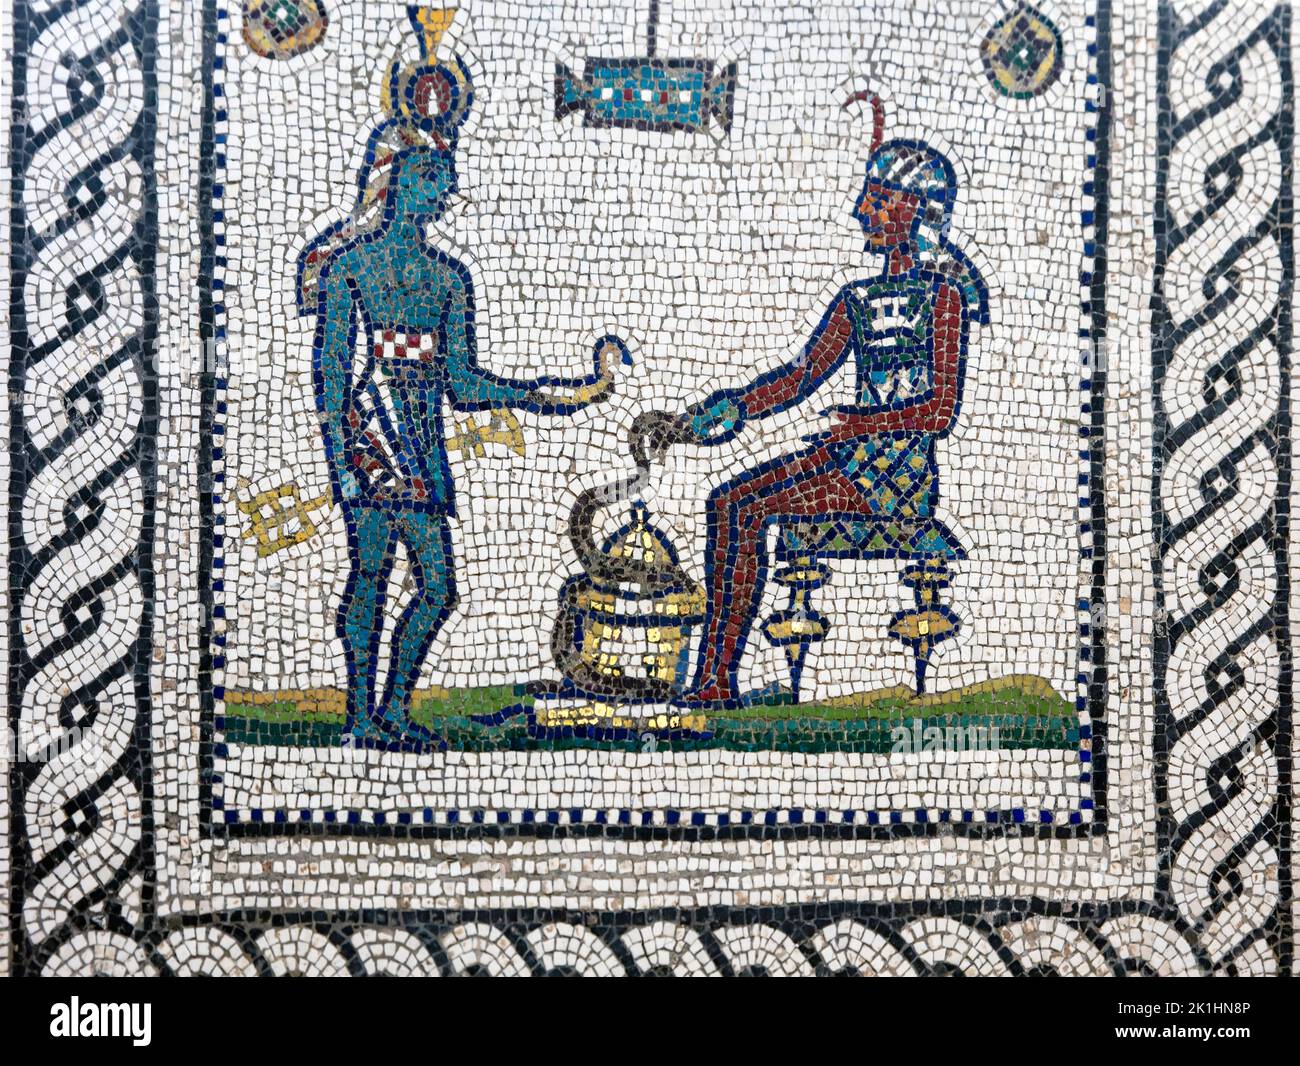 Antico pavimento mosaico romano con scena egiziana nel Metropolitan Museum of Art (MET) NYC, USA Foto Stock